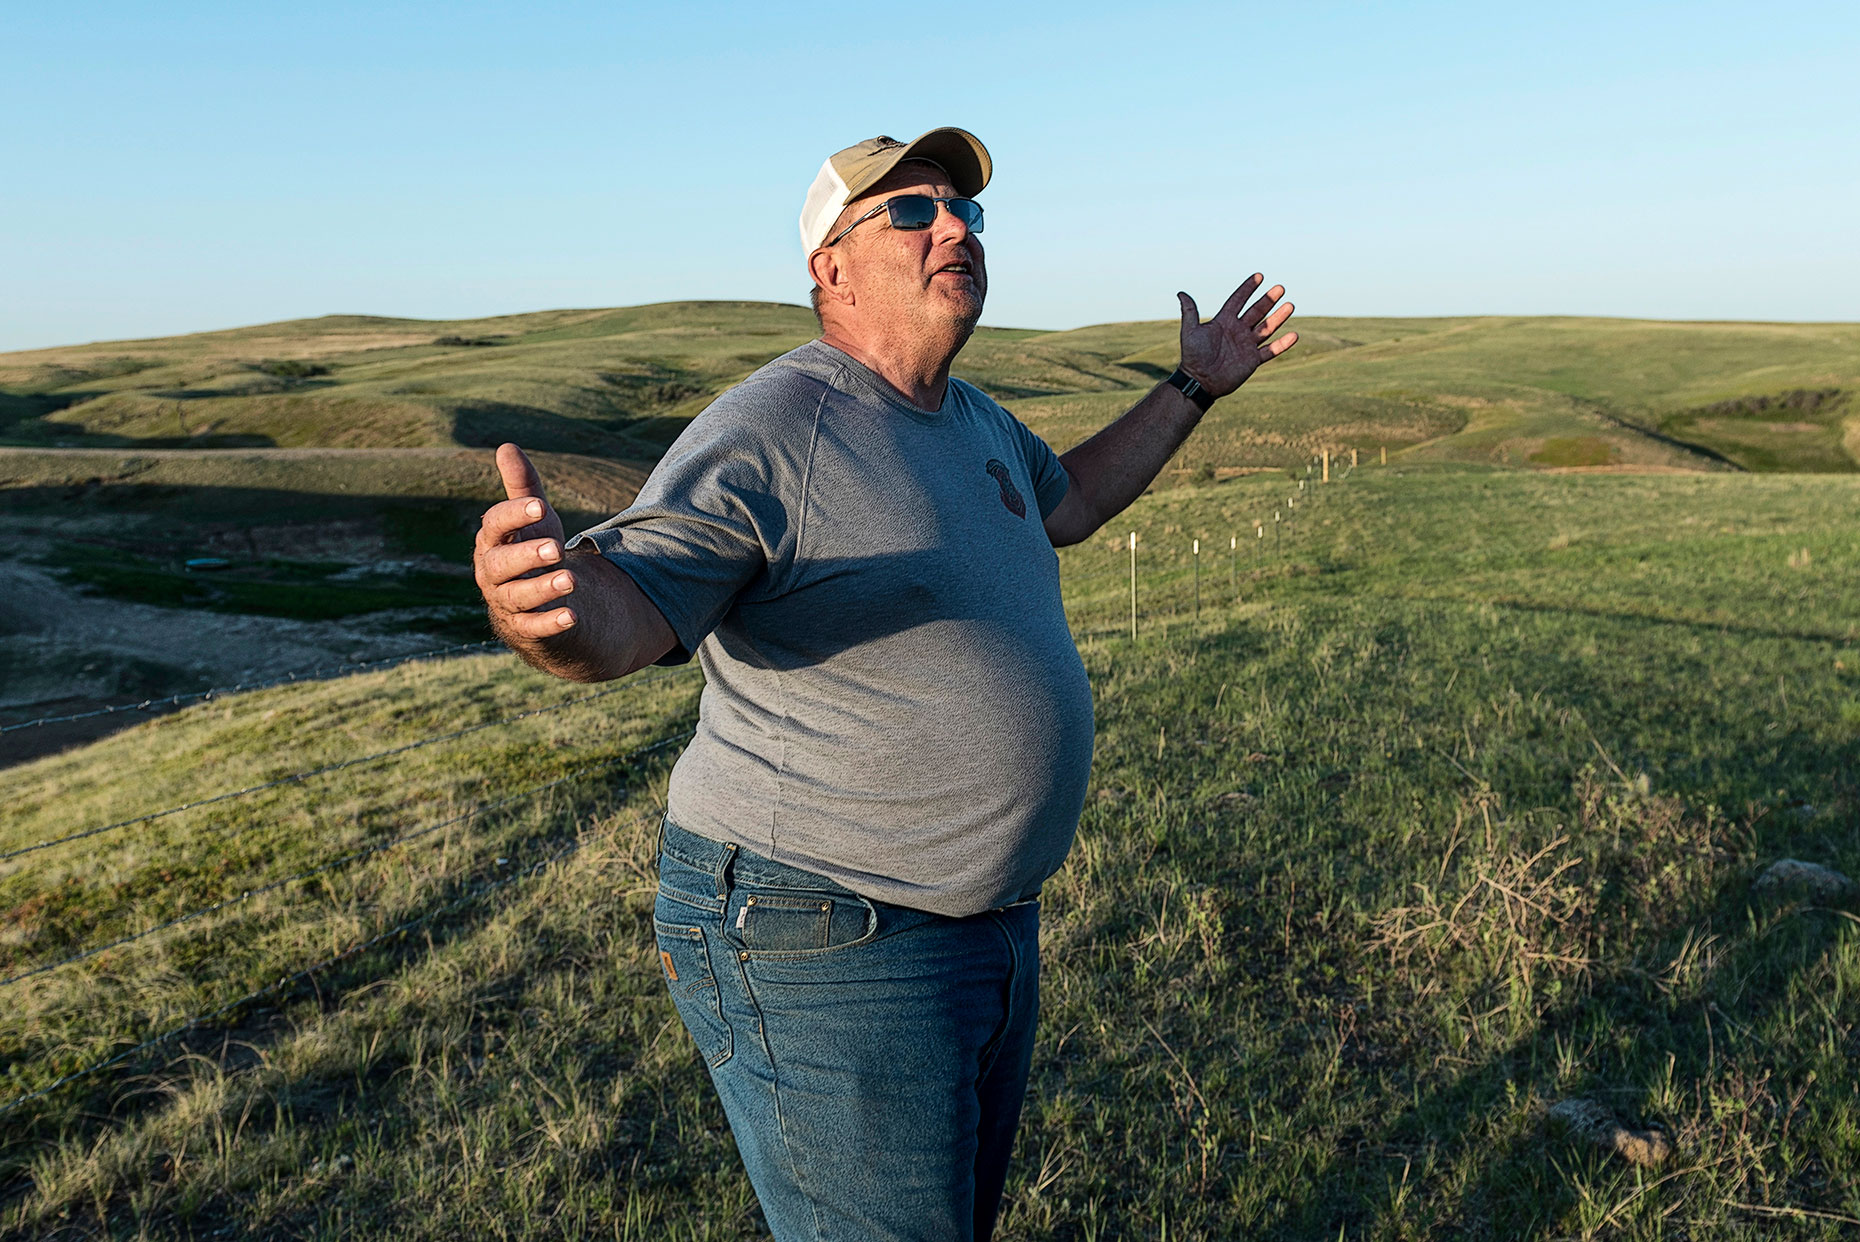 A photo of rancher Larry Novak taken by North Dakota photojournalist Dan Koeck